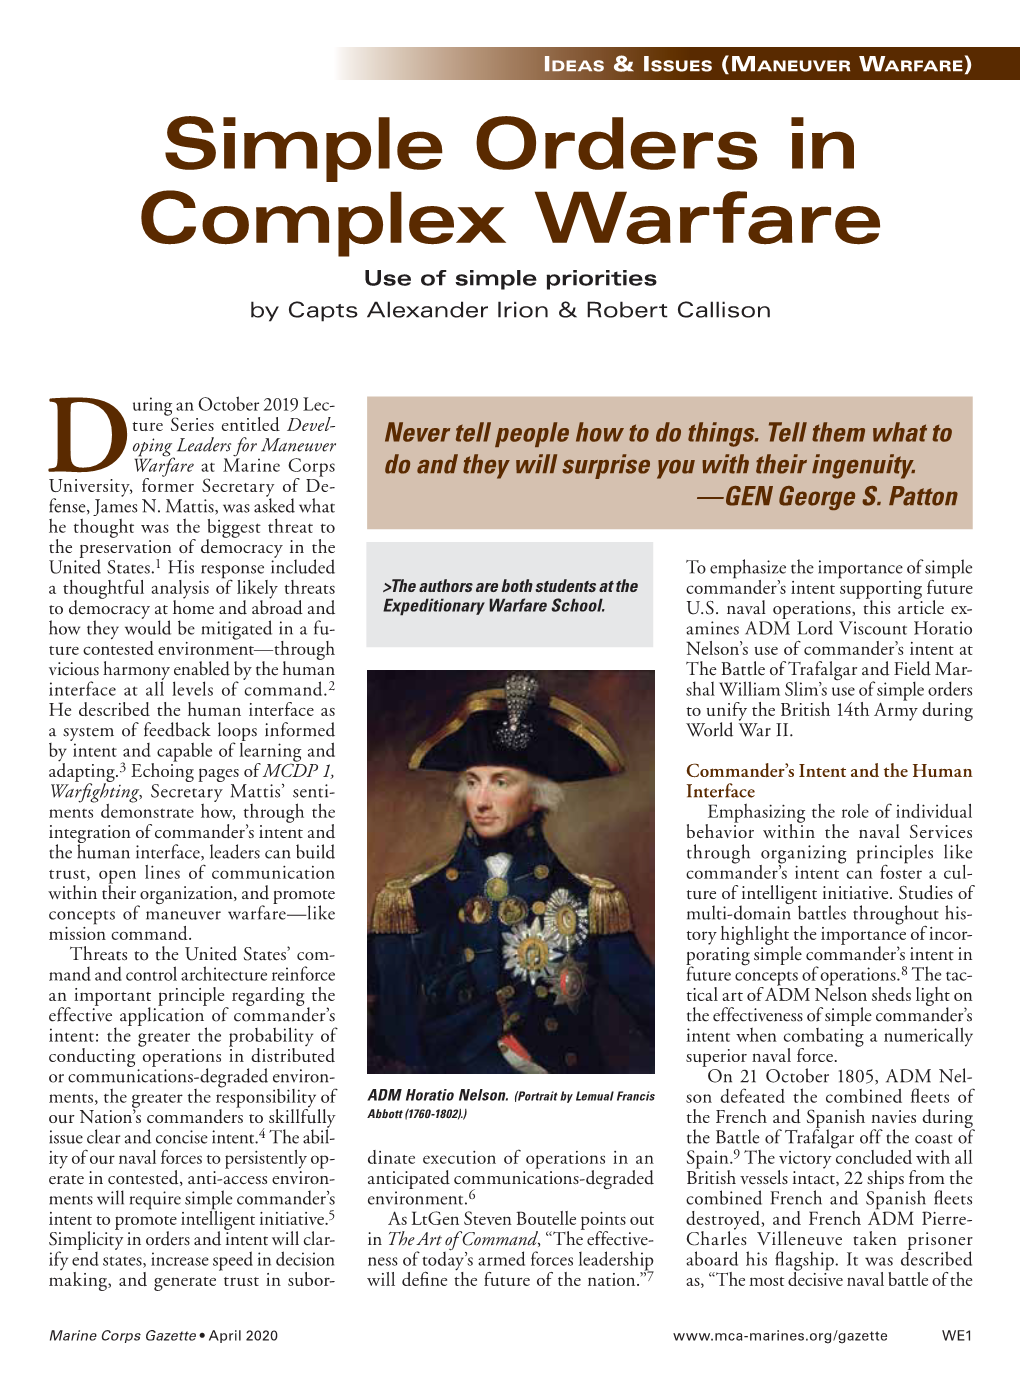 Simple Orders in Complex Warfare Use of Simple Priorities by Capts Alexander Irion & Robert Callison